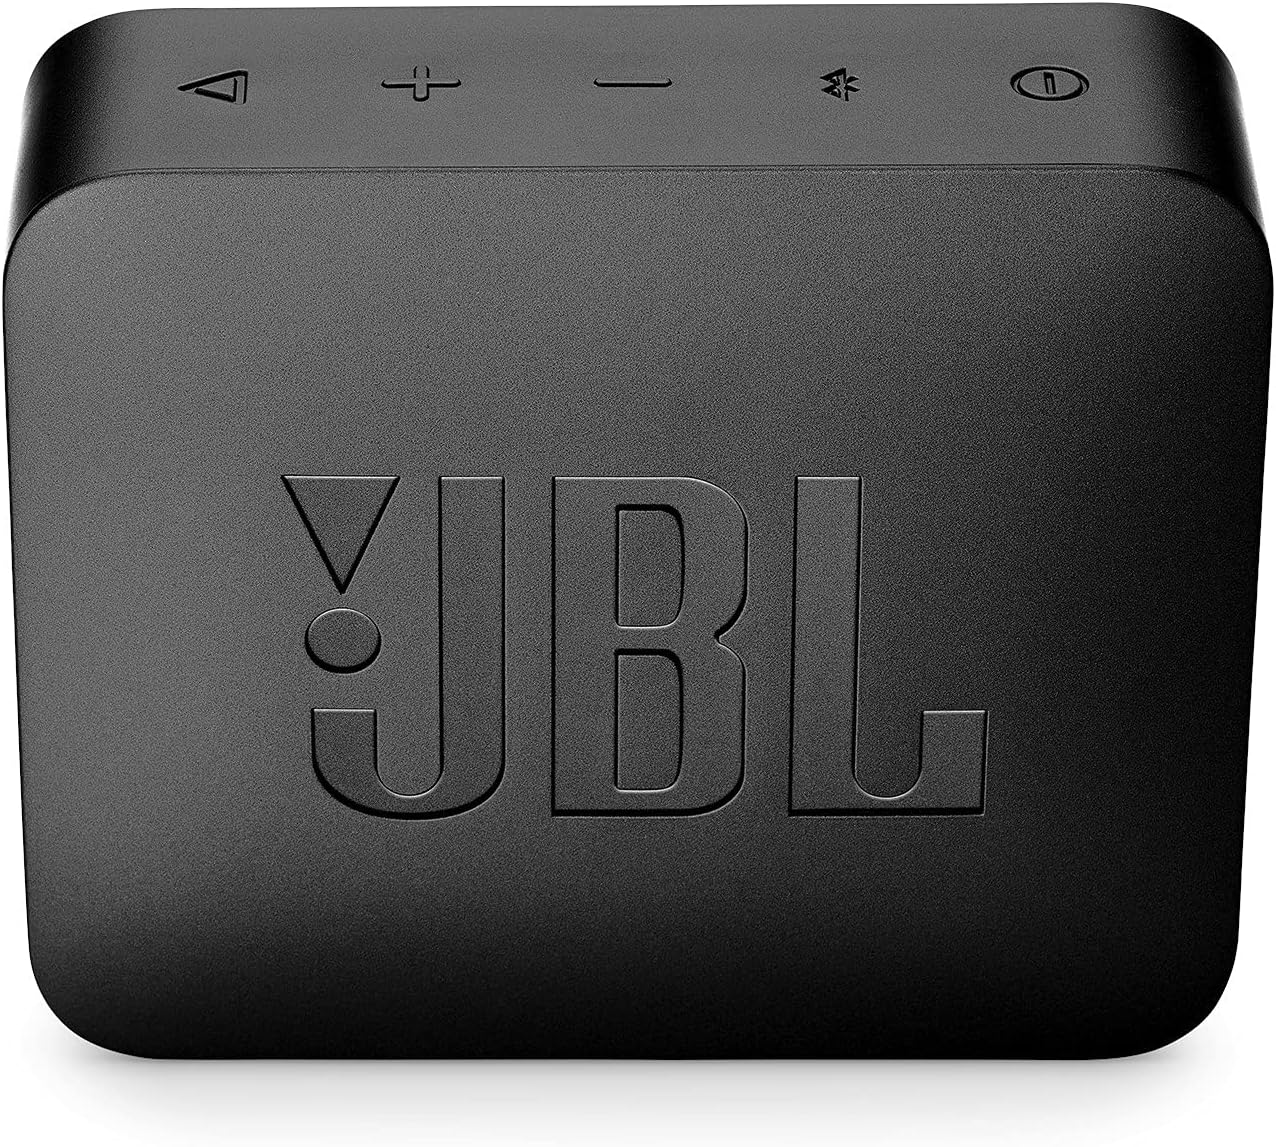 JBL Clip 3 portable Bluetooth speaker is $20 off at Walmart